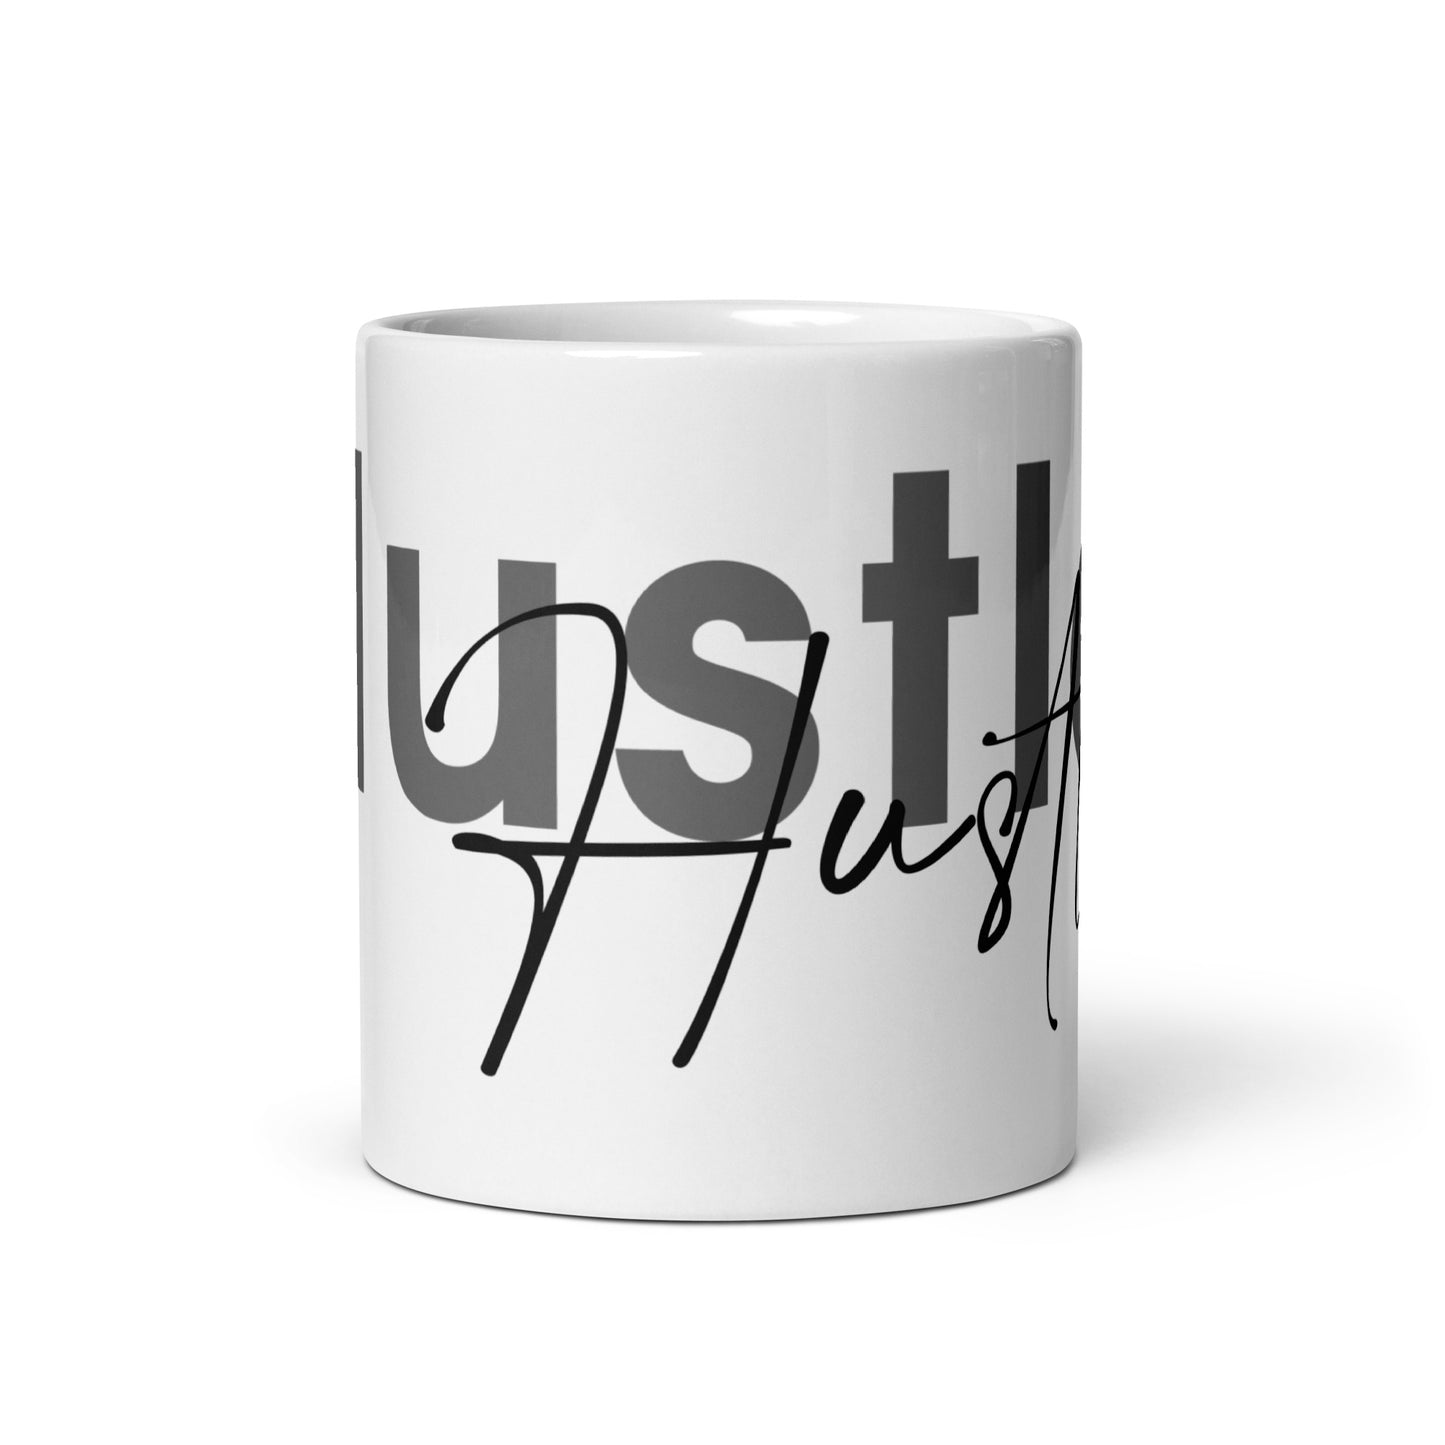 Hustle (v4) White glossy mug